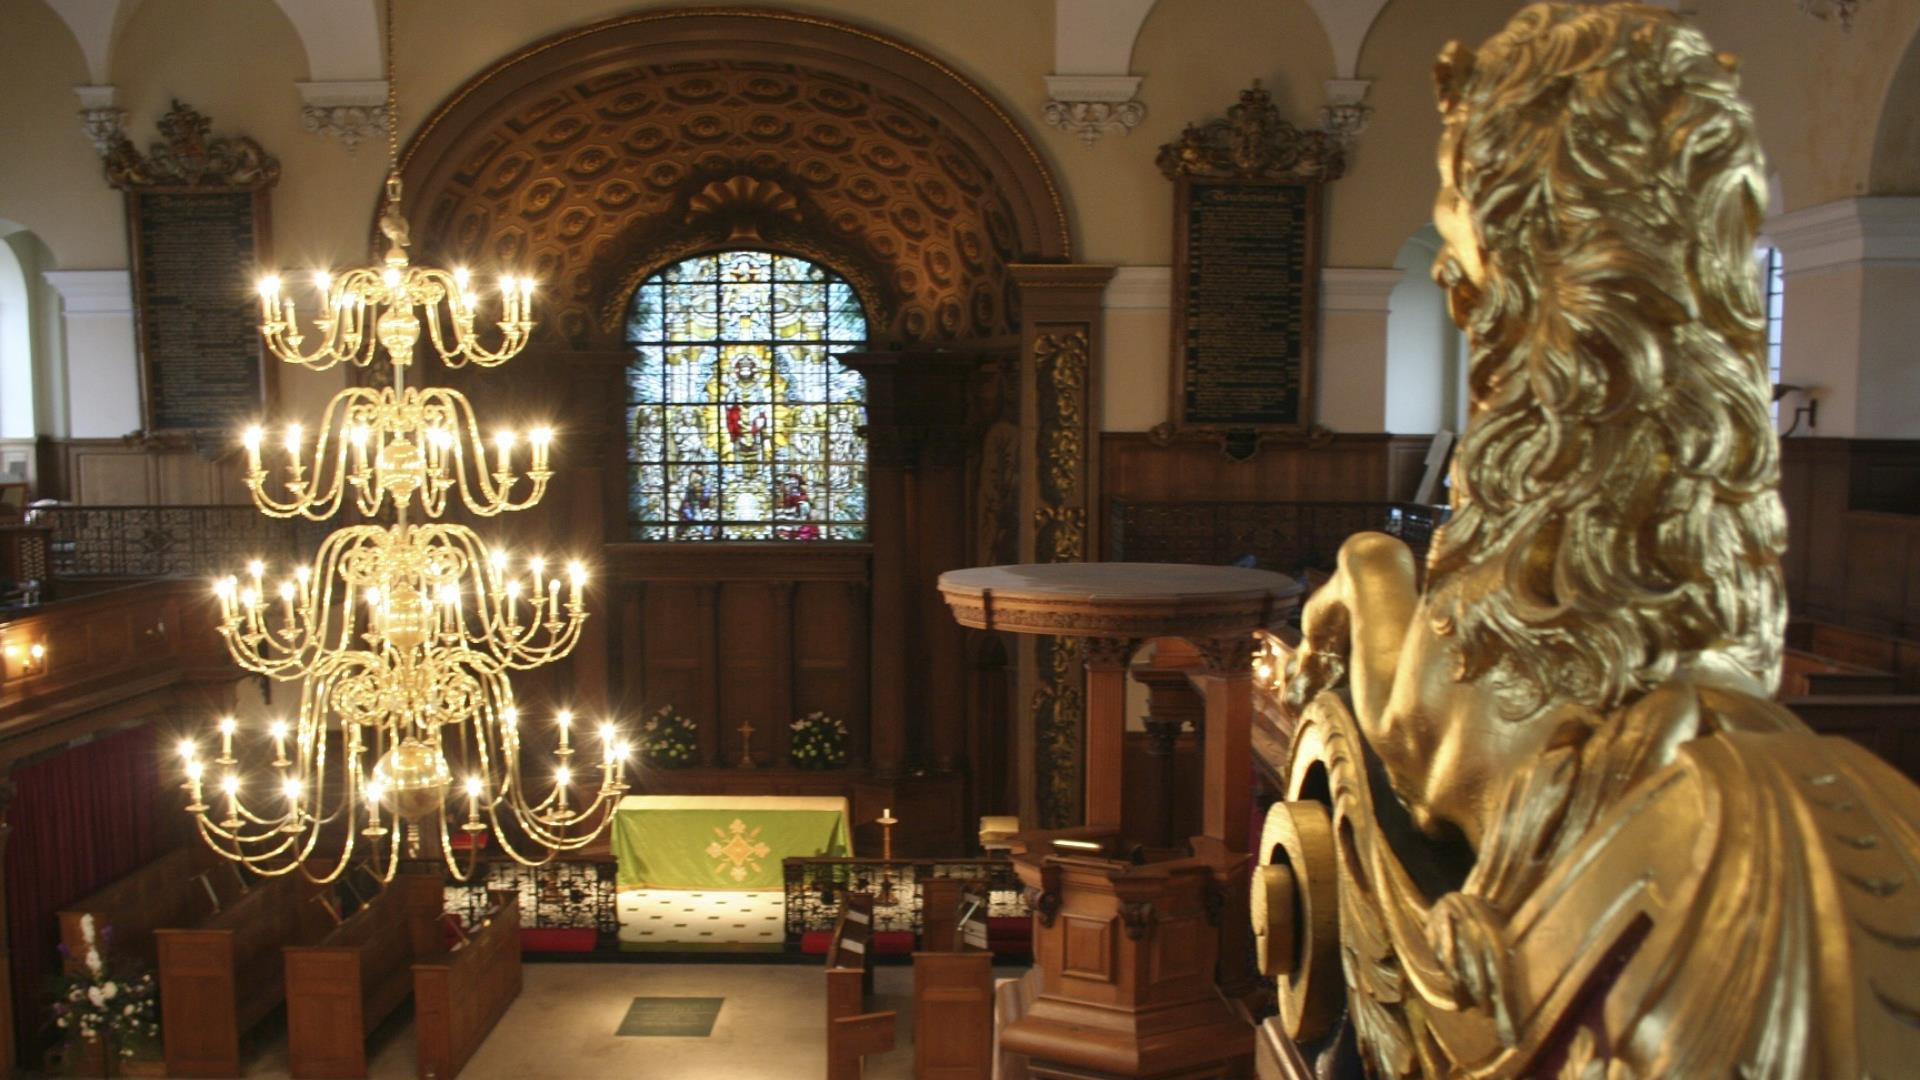 The interior of St Alfege Church in Greenwich.